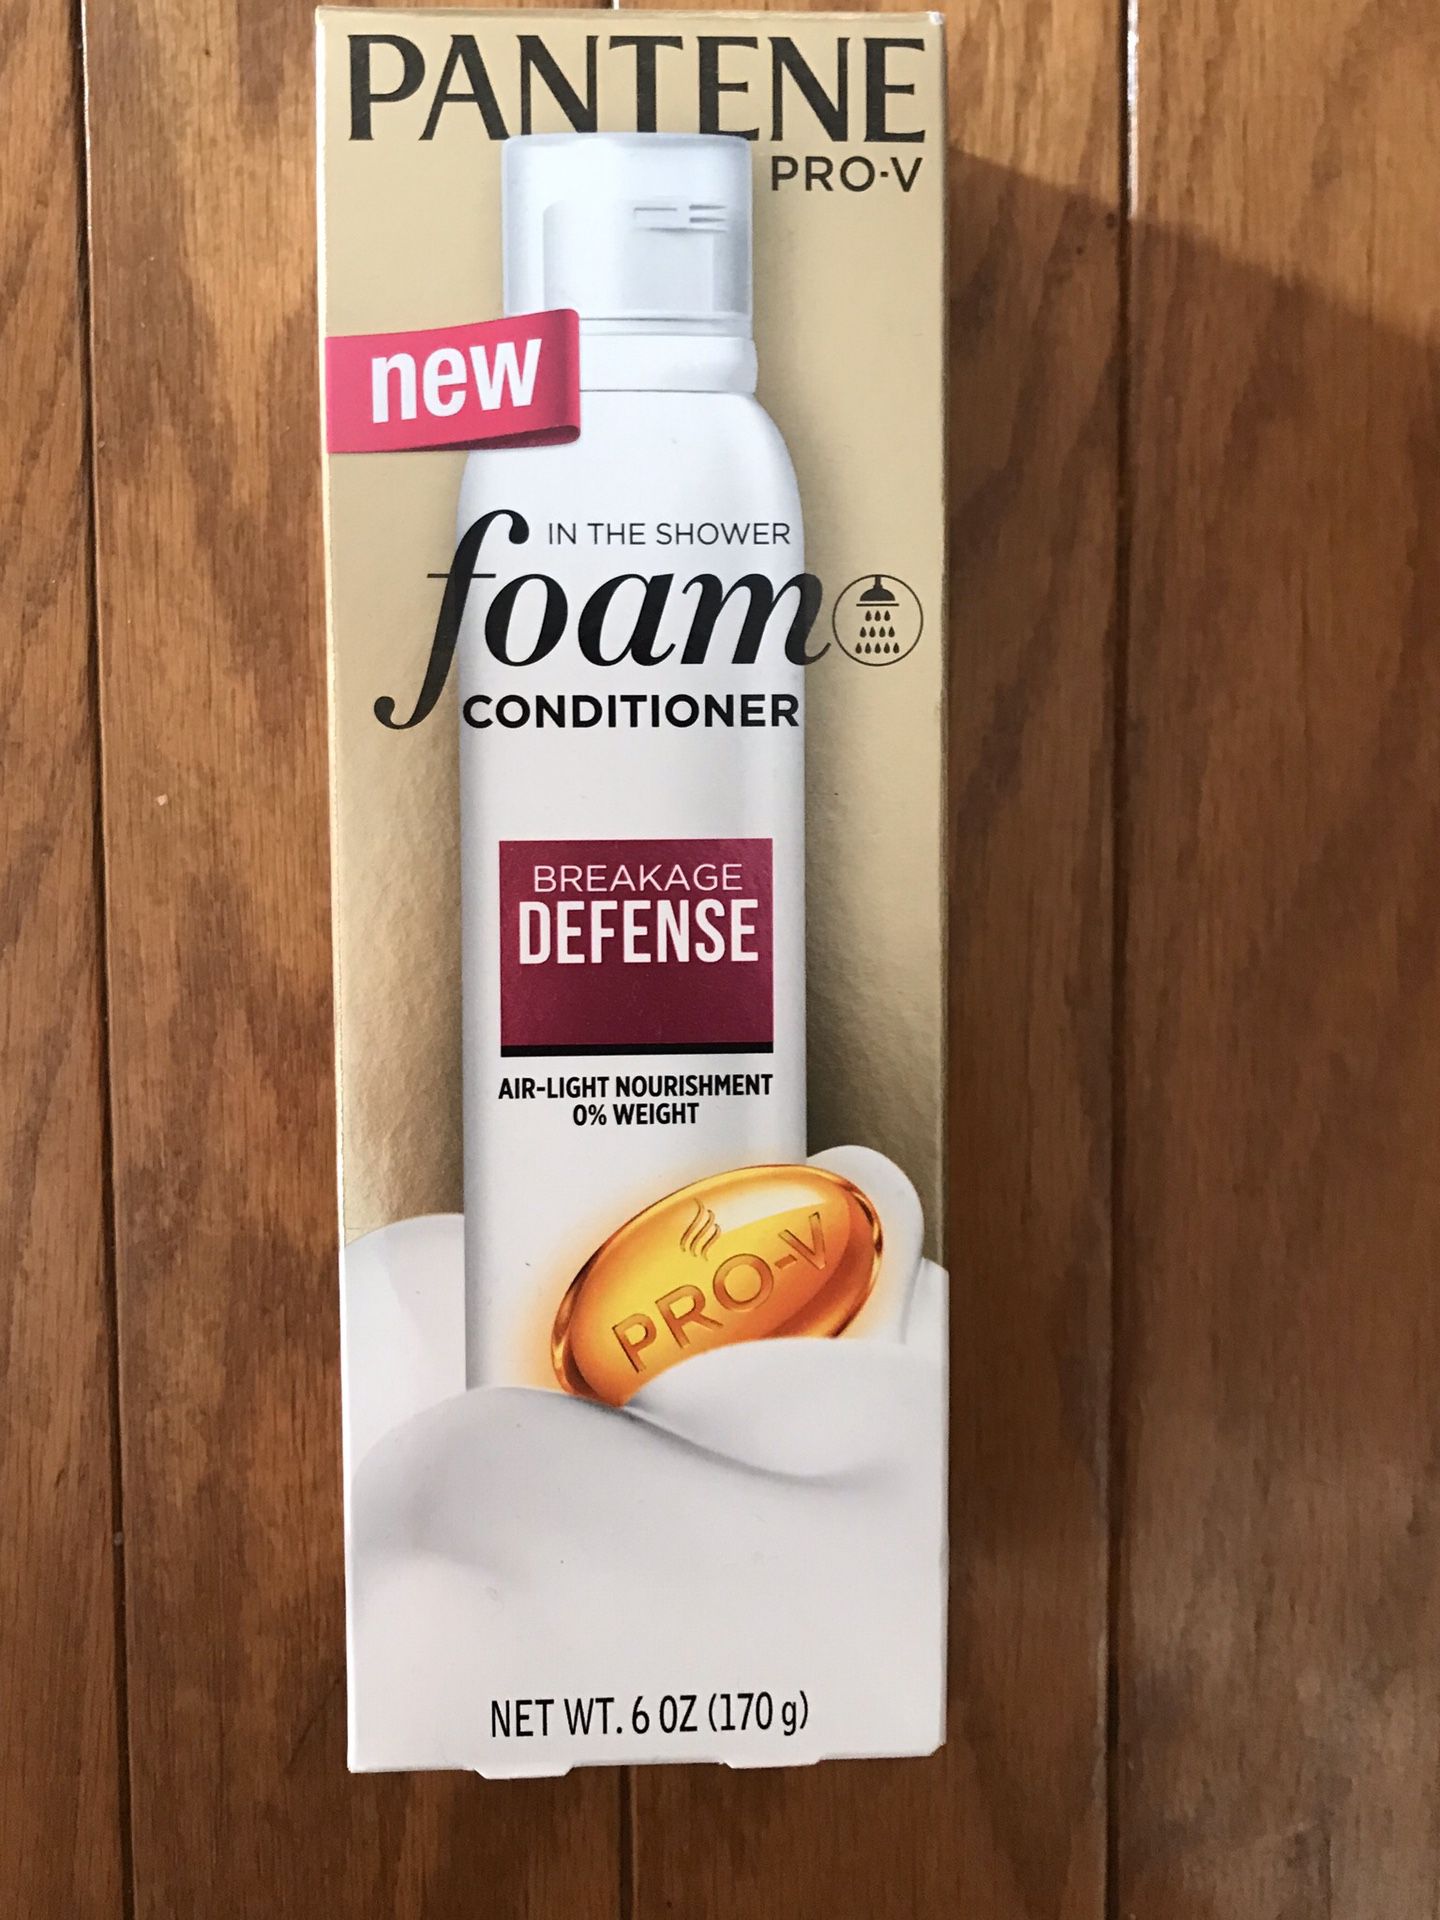 Pantene Pro-V Foam Conditioner Breakage Defense 6 oz